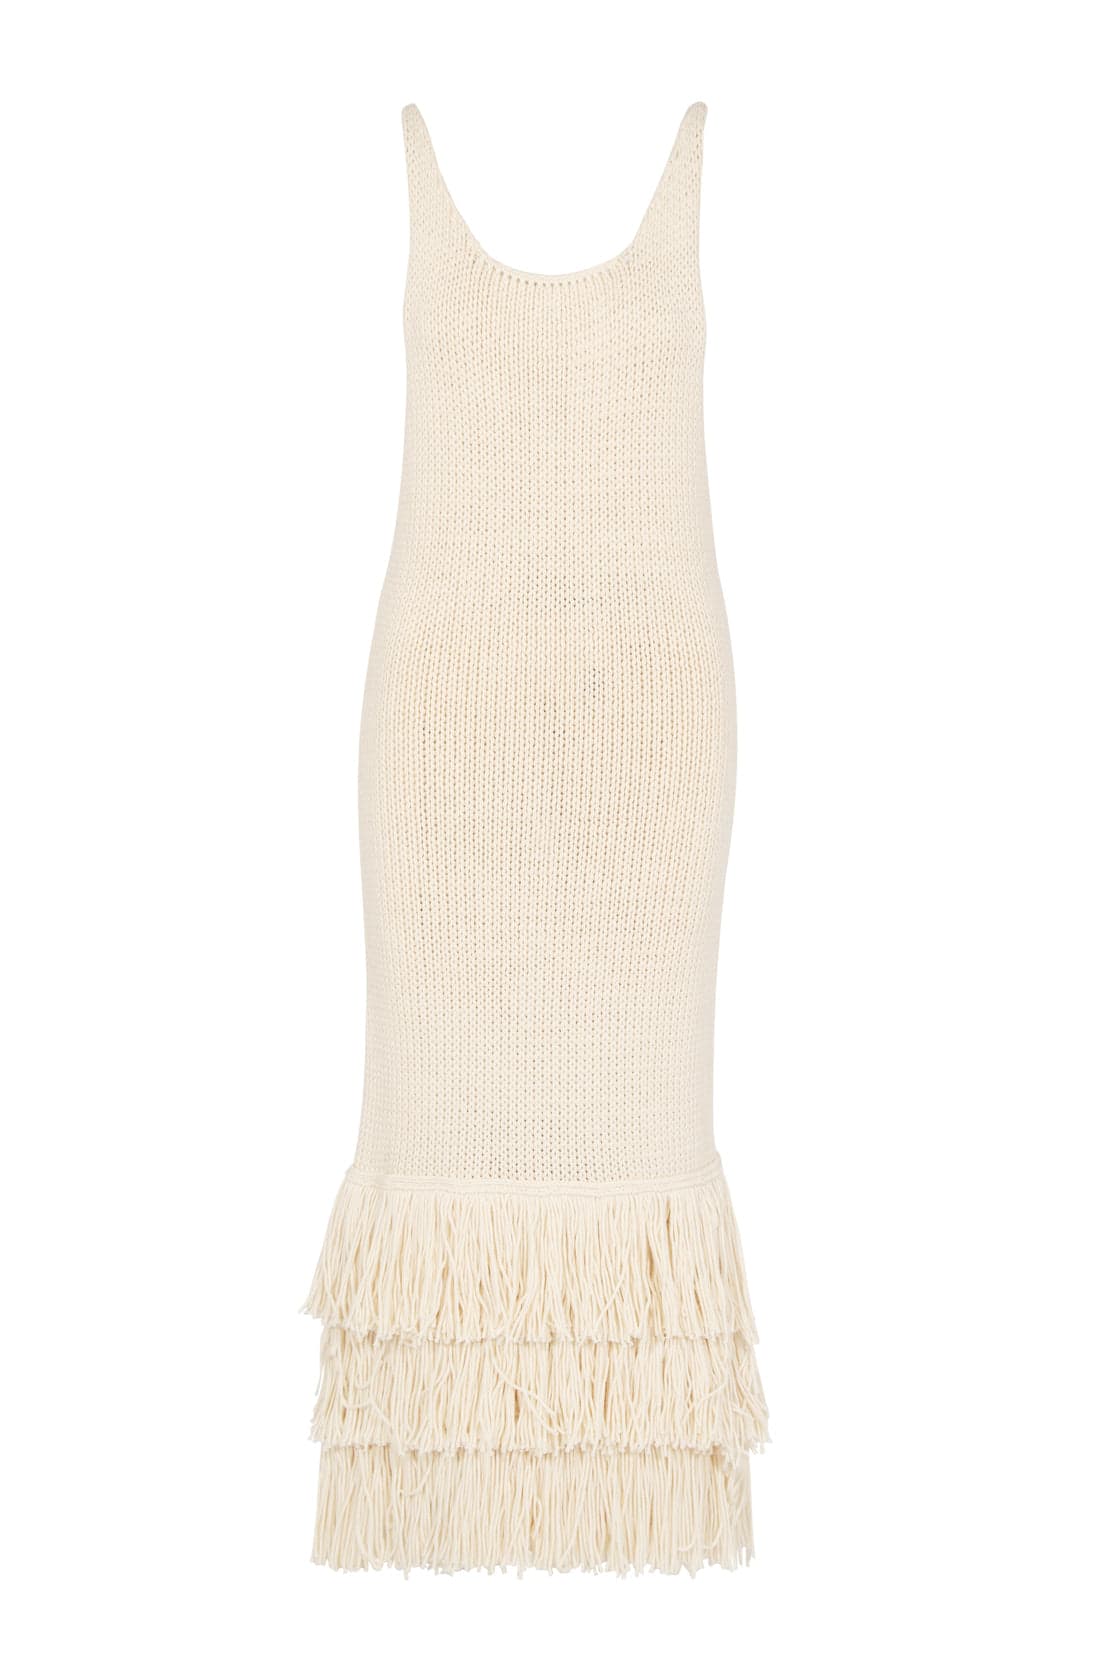 Amotea Mila Dress In Ivory Knit